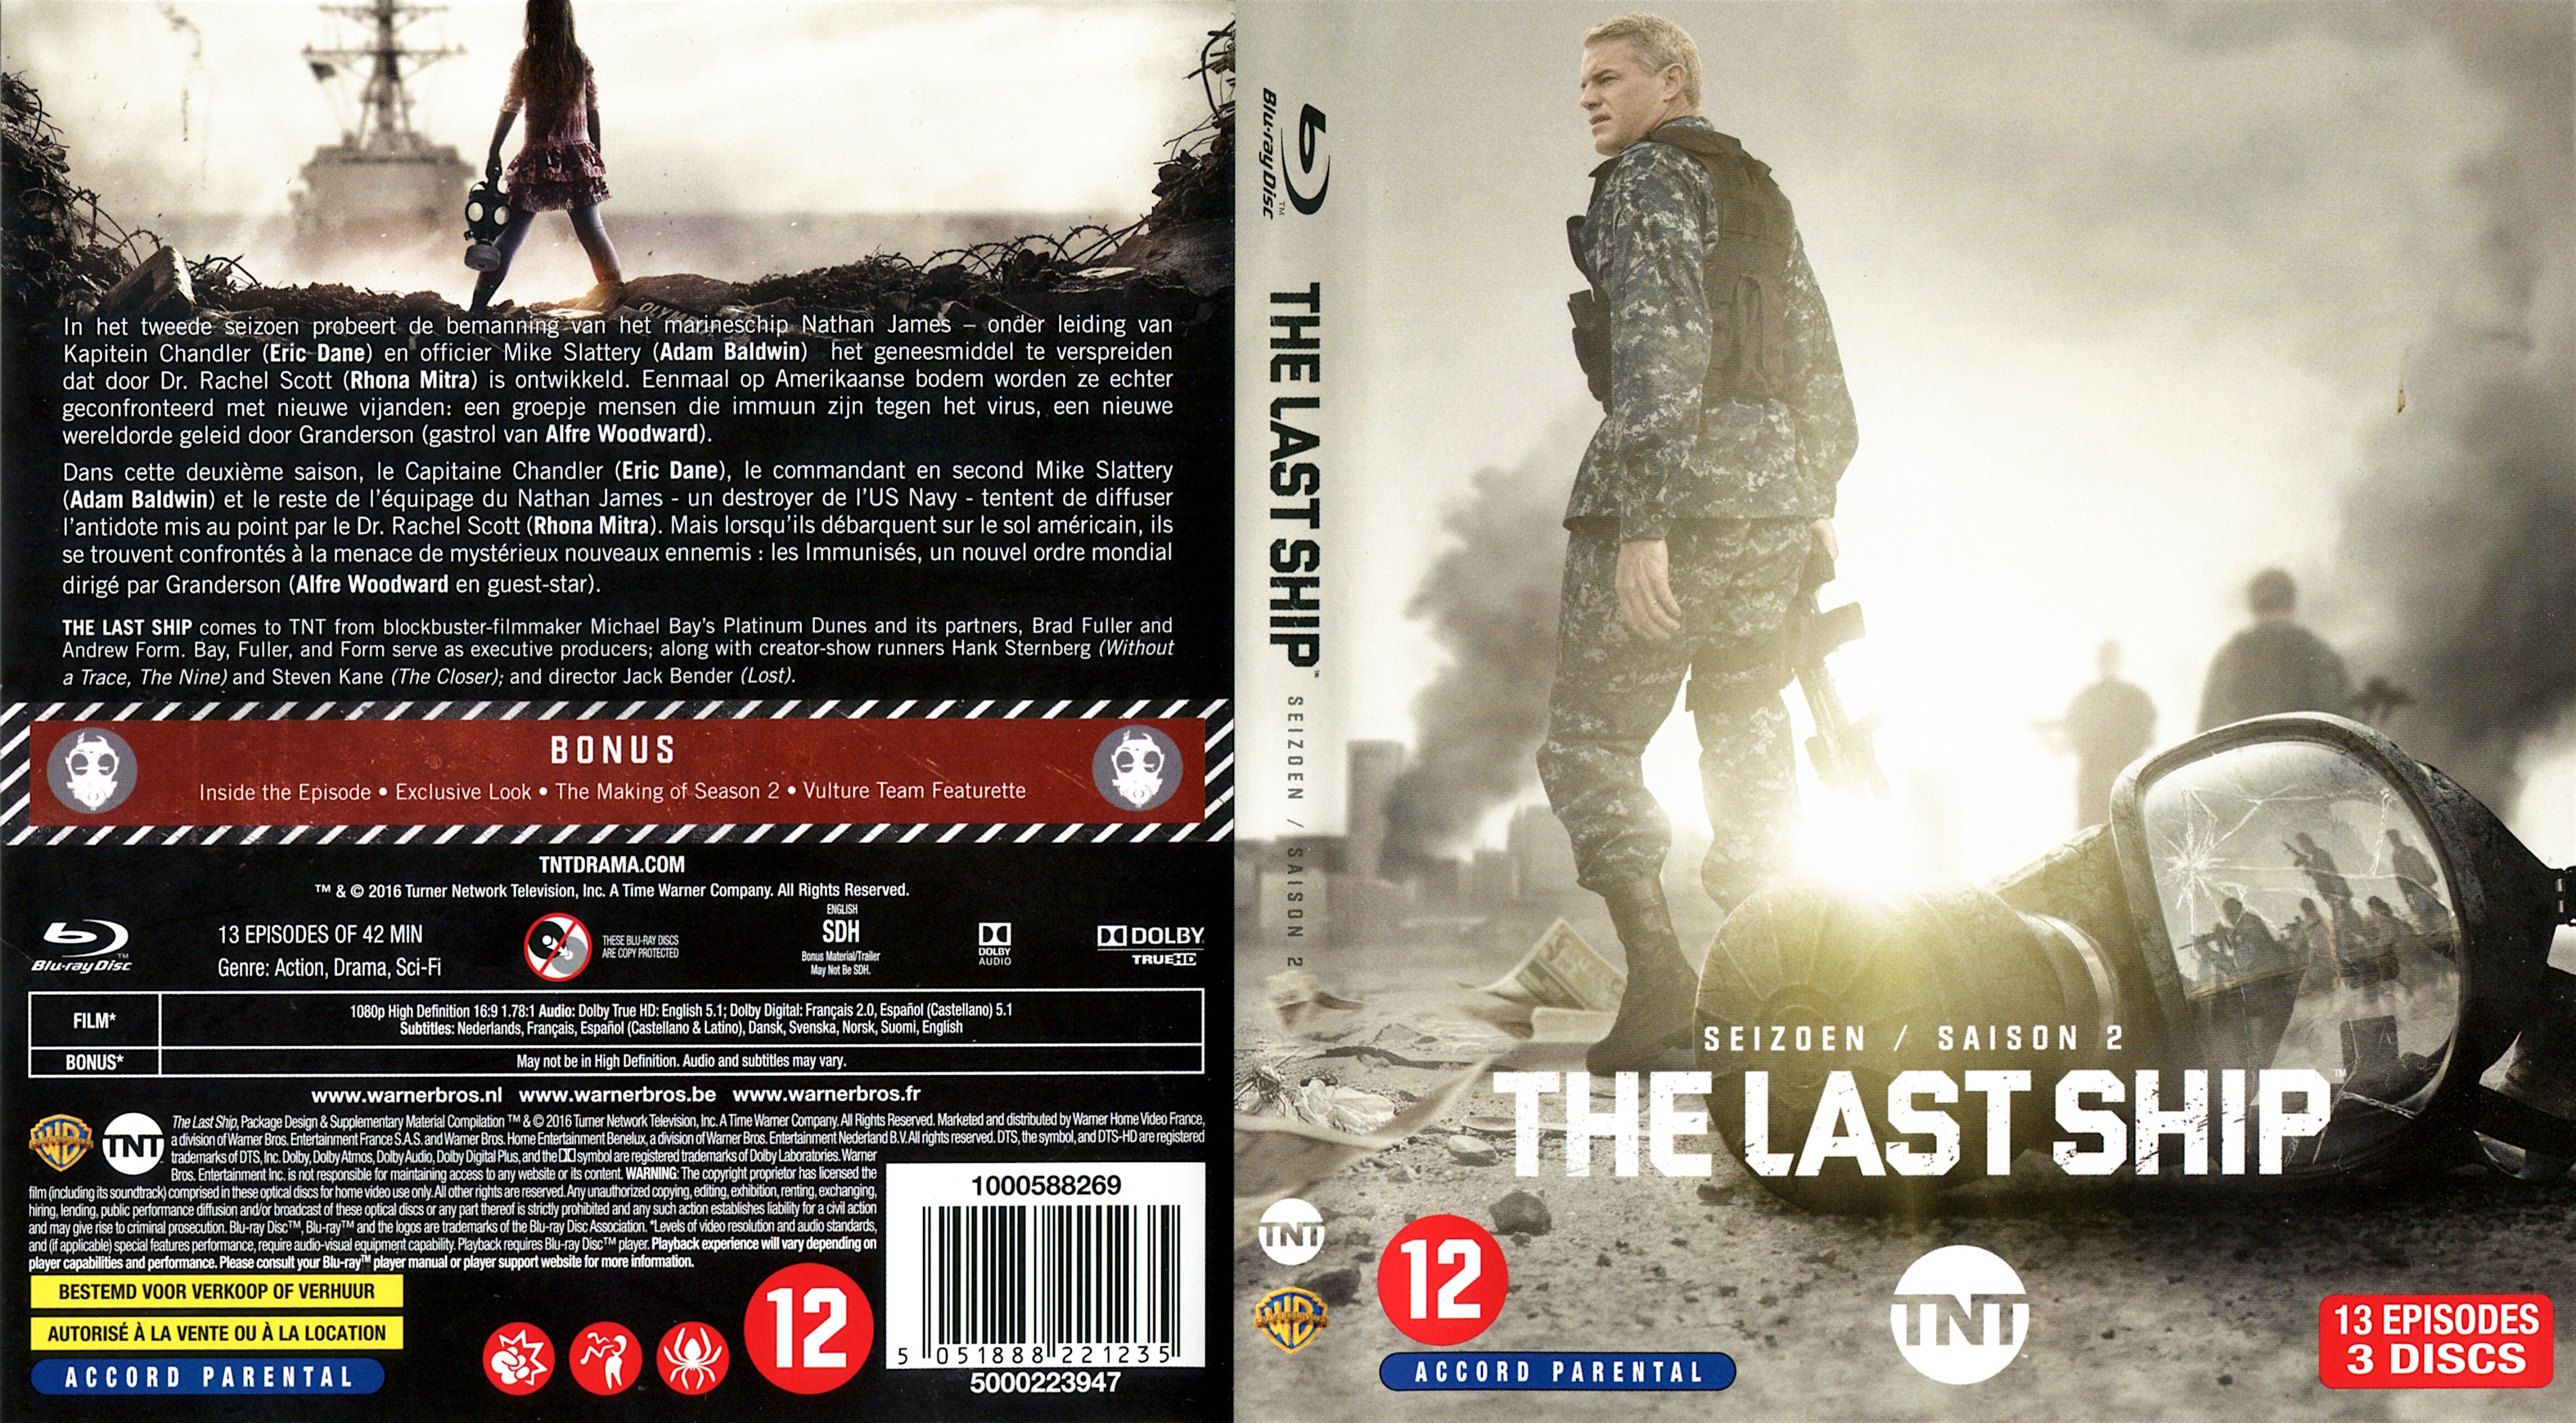 Jaquette DVD The last ship saison 2 (BLU-RAY)